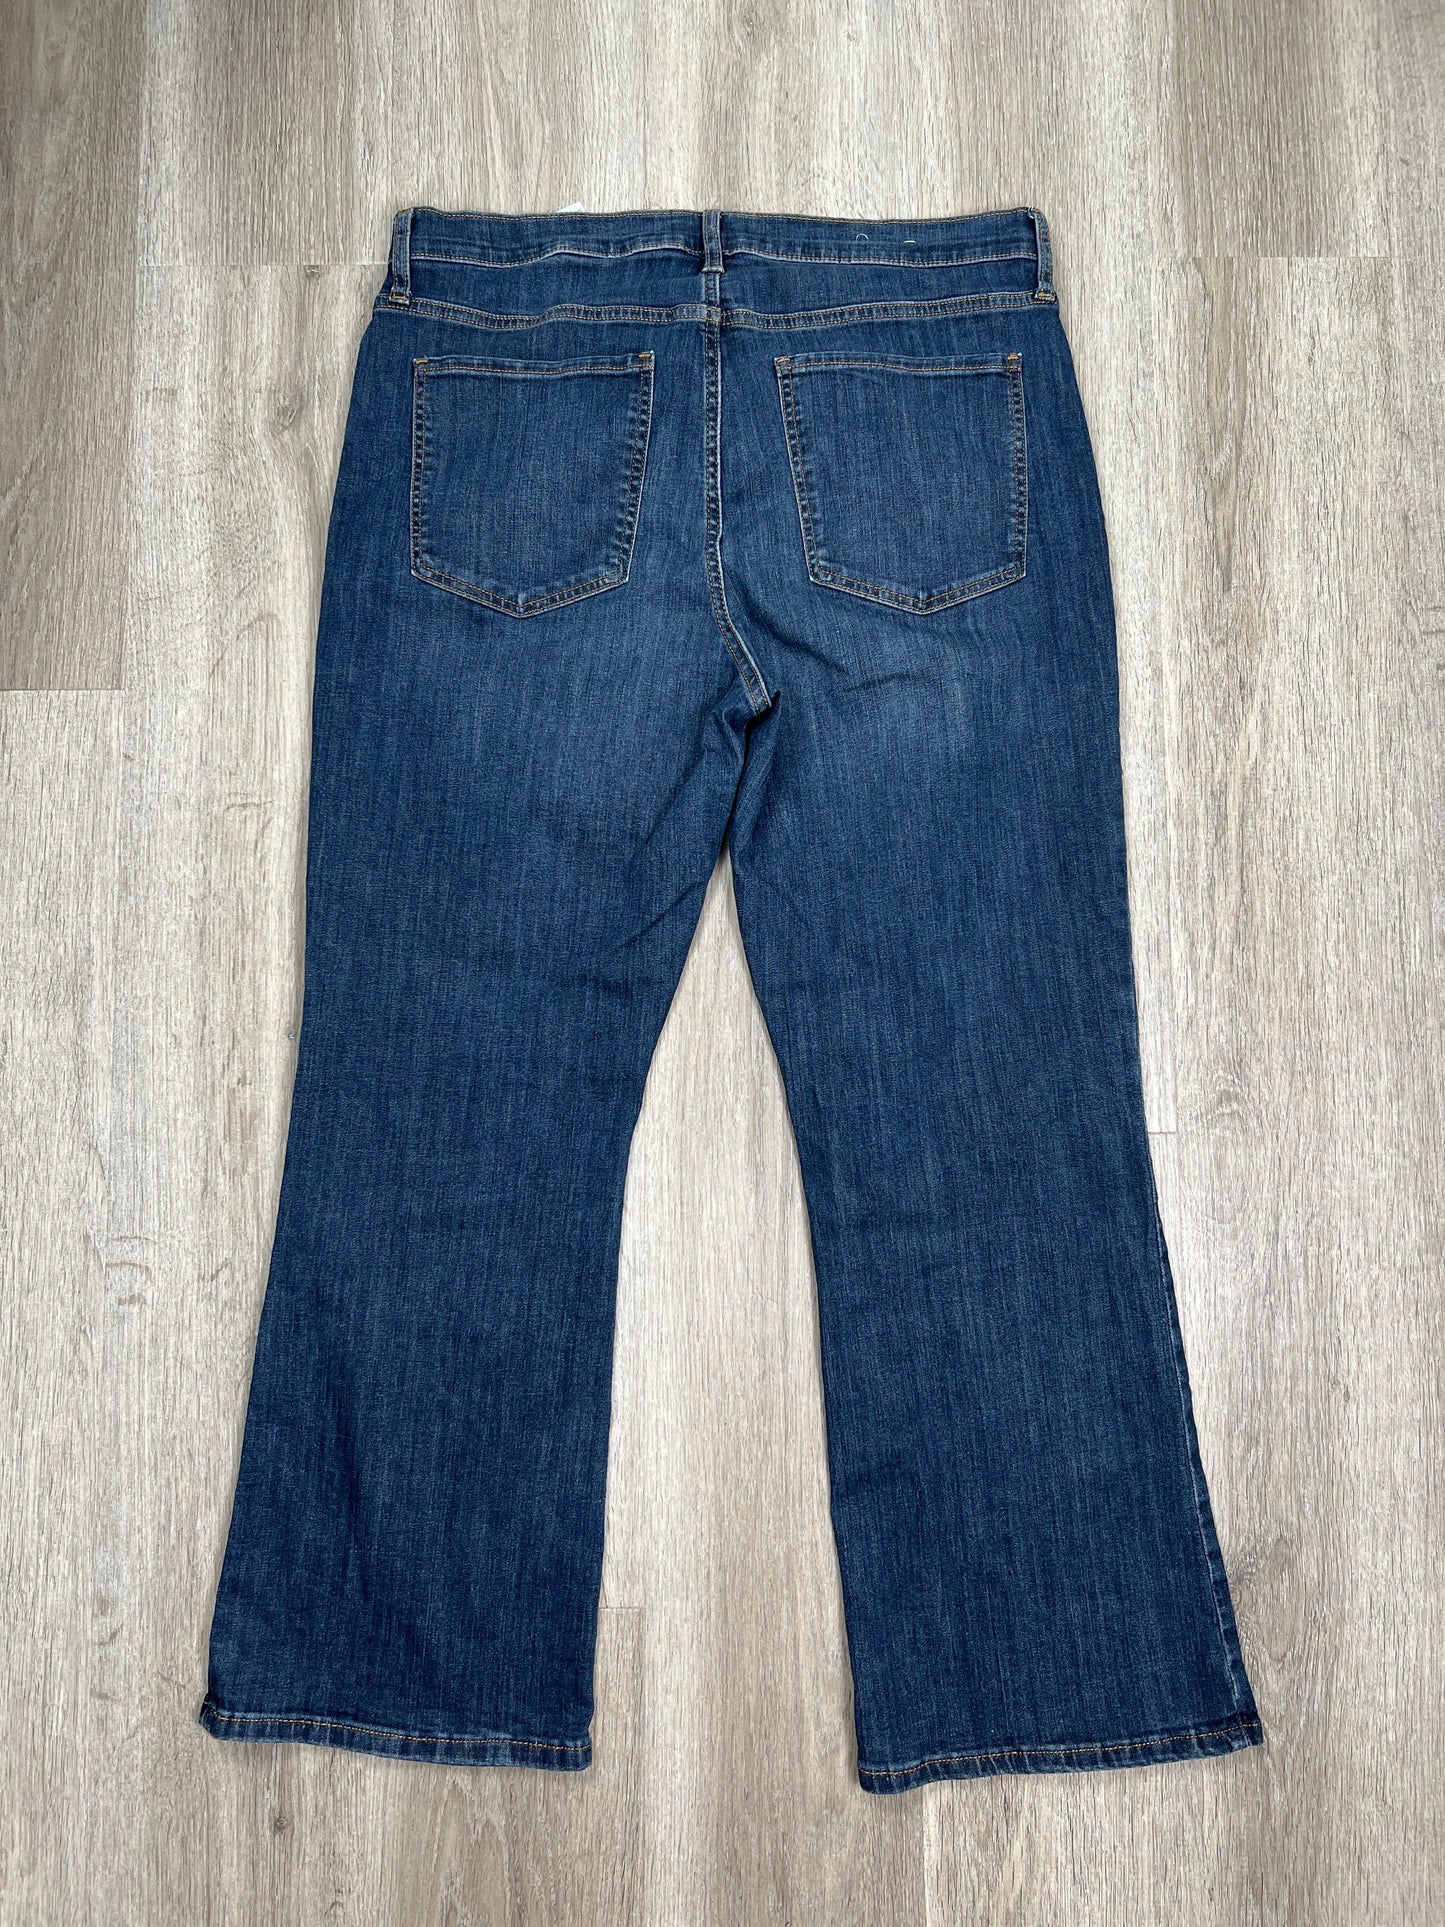 Blue Denim Jeans Boot Cut Banana Republic, Size 16